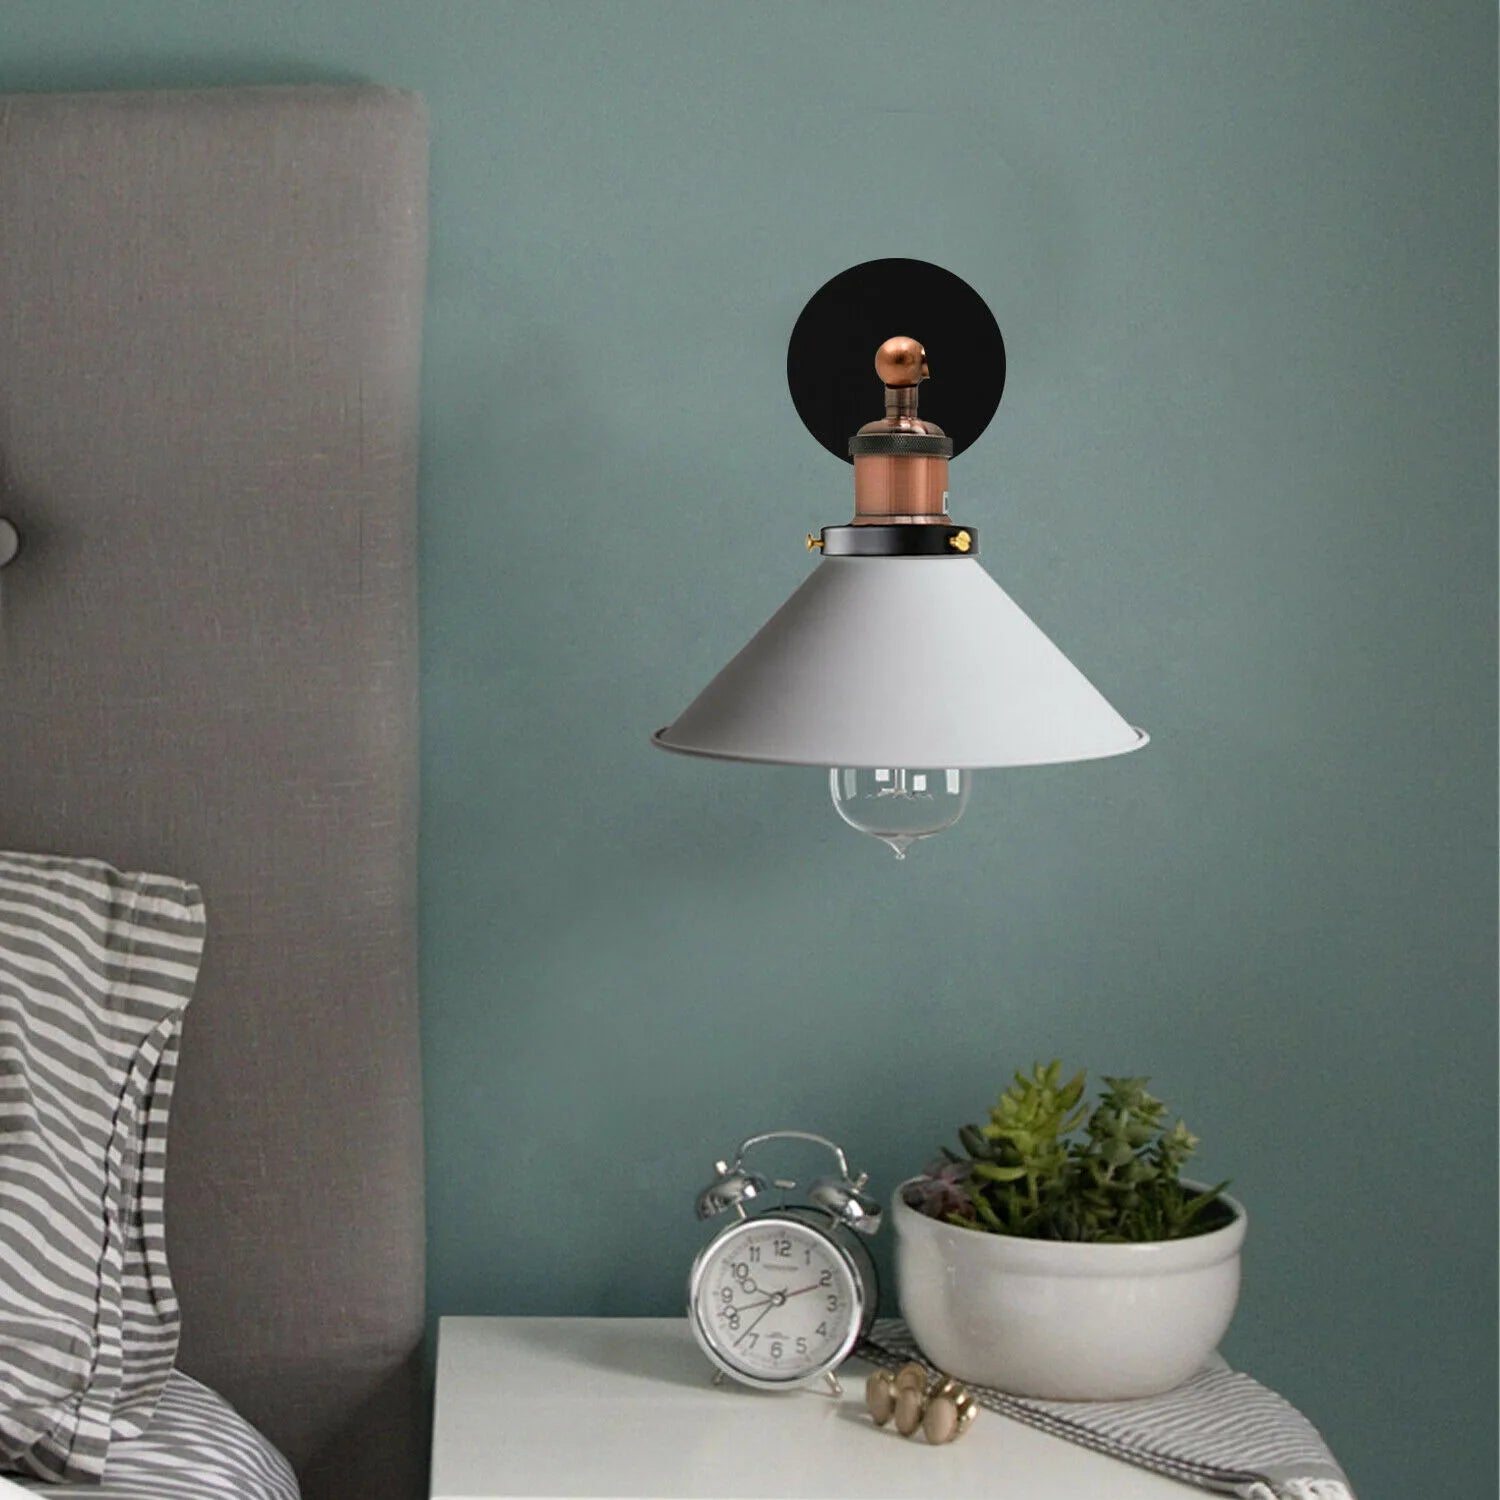 Industrial cone light shades wall light living room-e27 holder-Application image